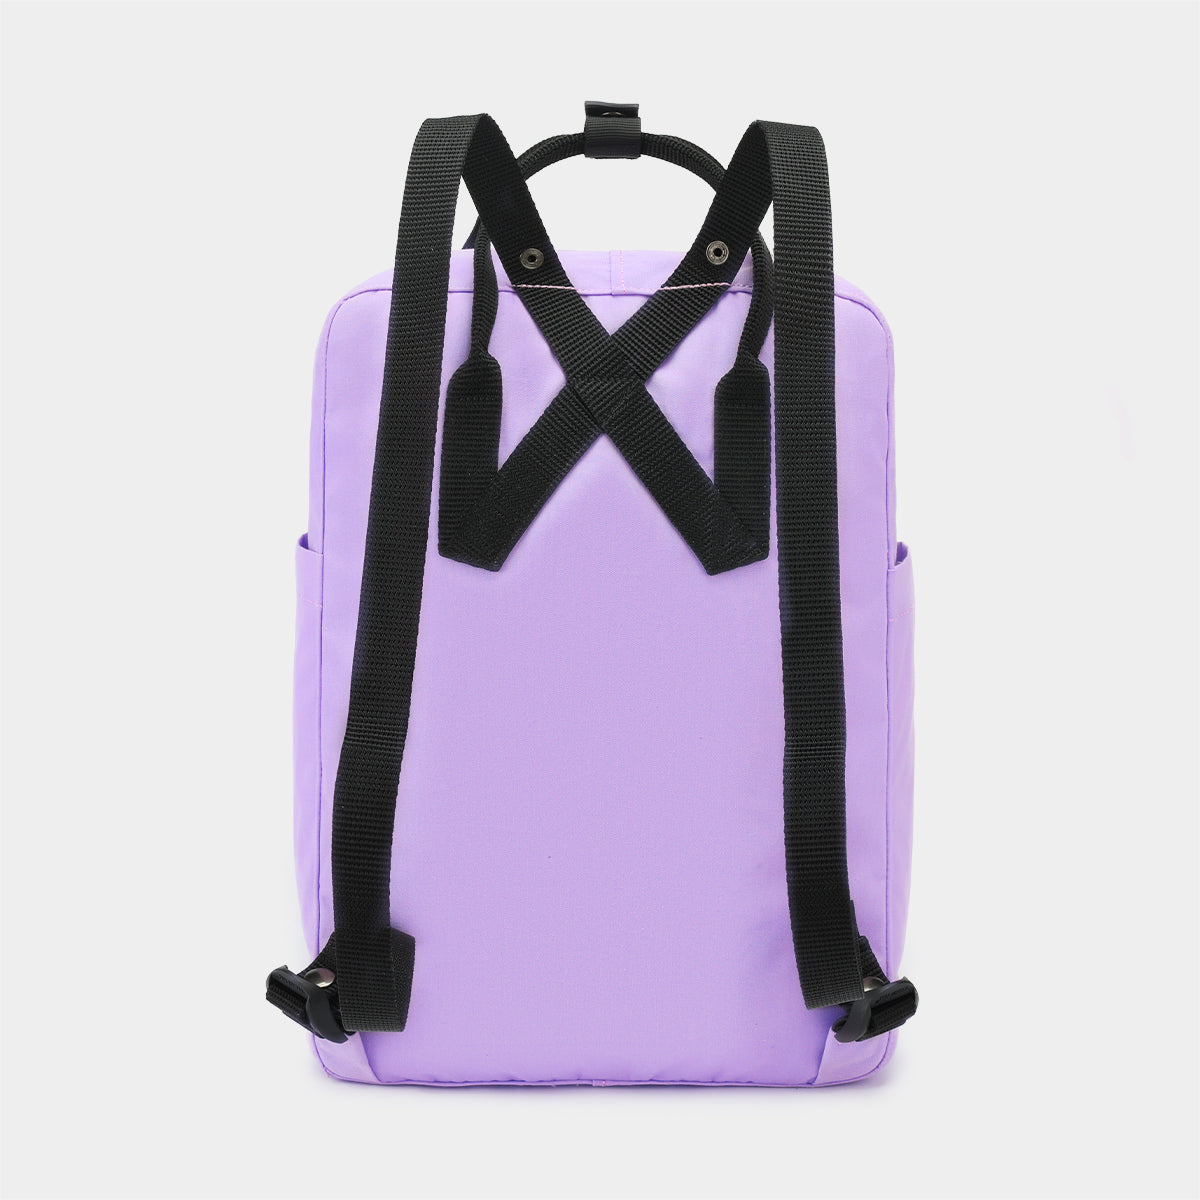 Tigernu T-B9016 Travel Office School Backpack Bag